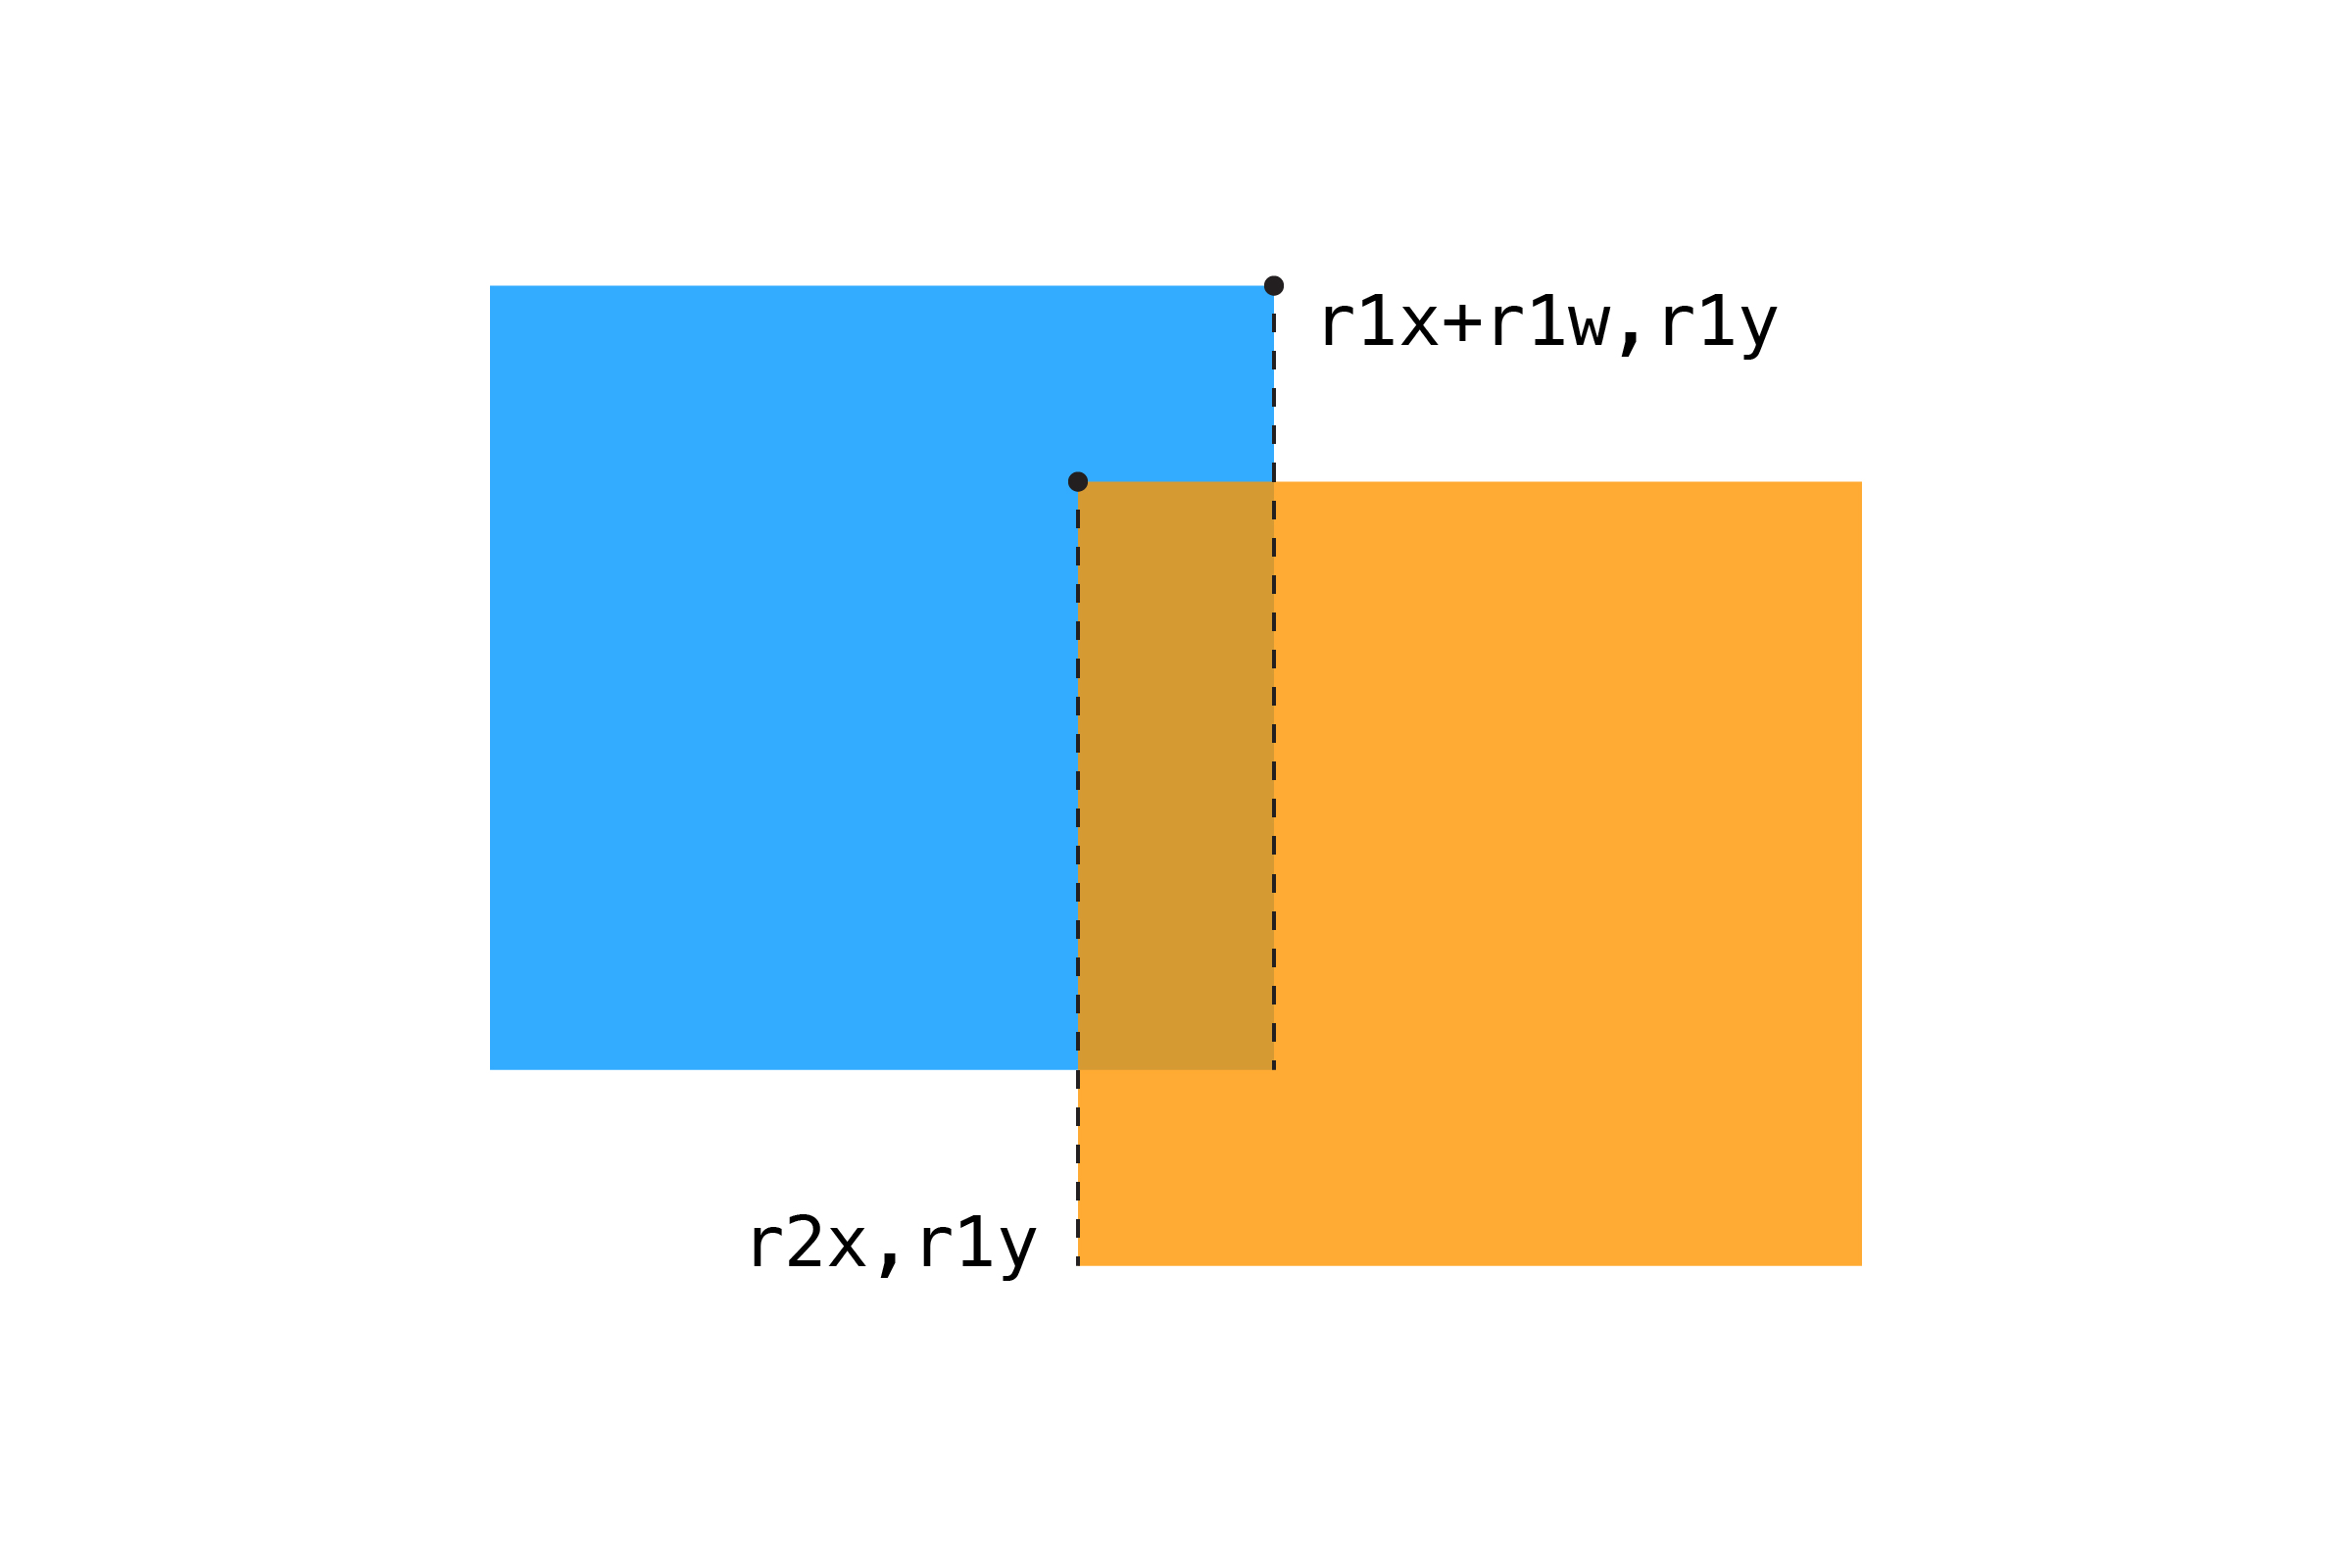 Testing rectangle overlap